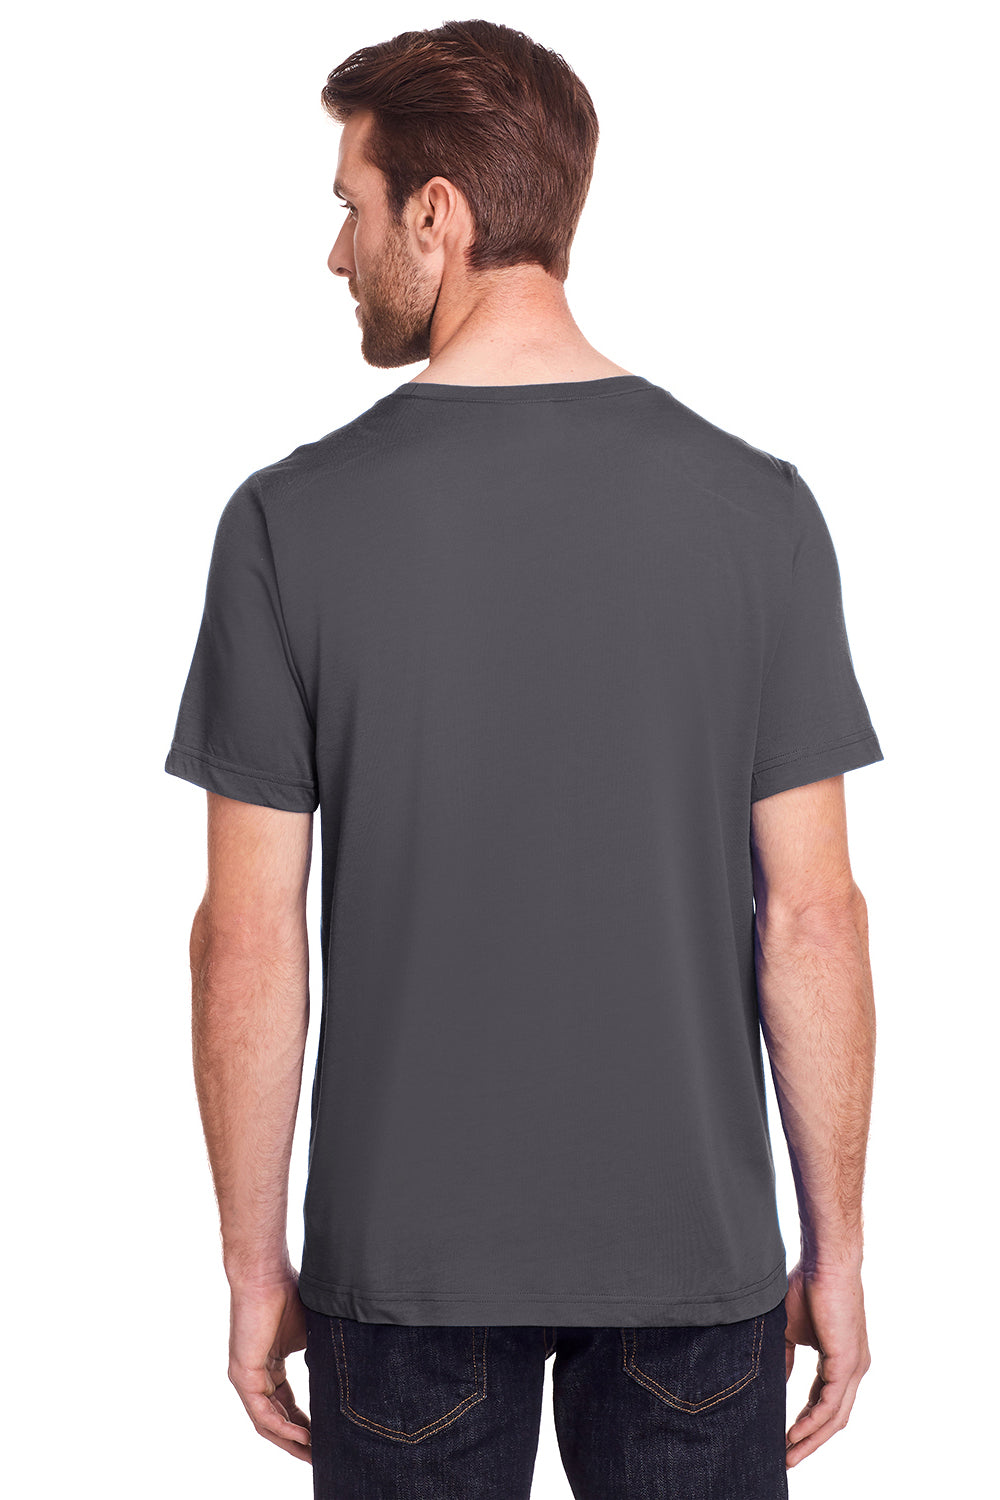 Core 365 CE111 Mens Fusion ChromaSoft Performance Moisture Wicking Short Sleeve Crewneck T-Shirt Carbon Grey Back